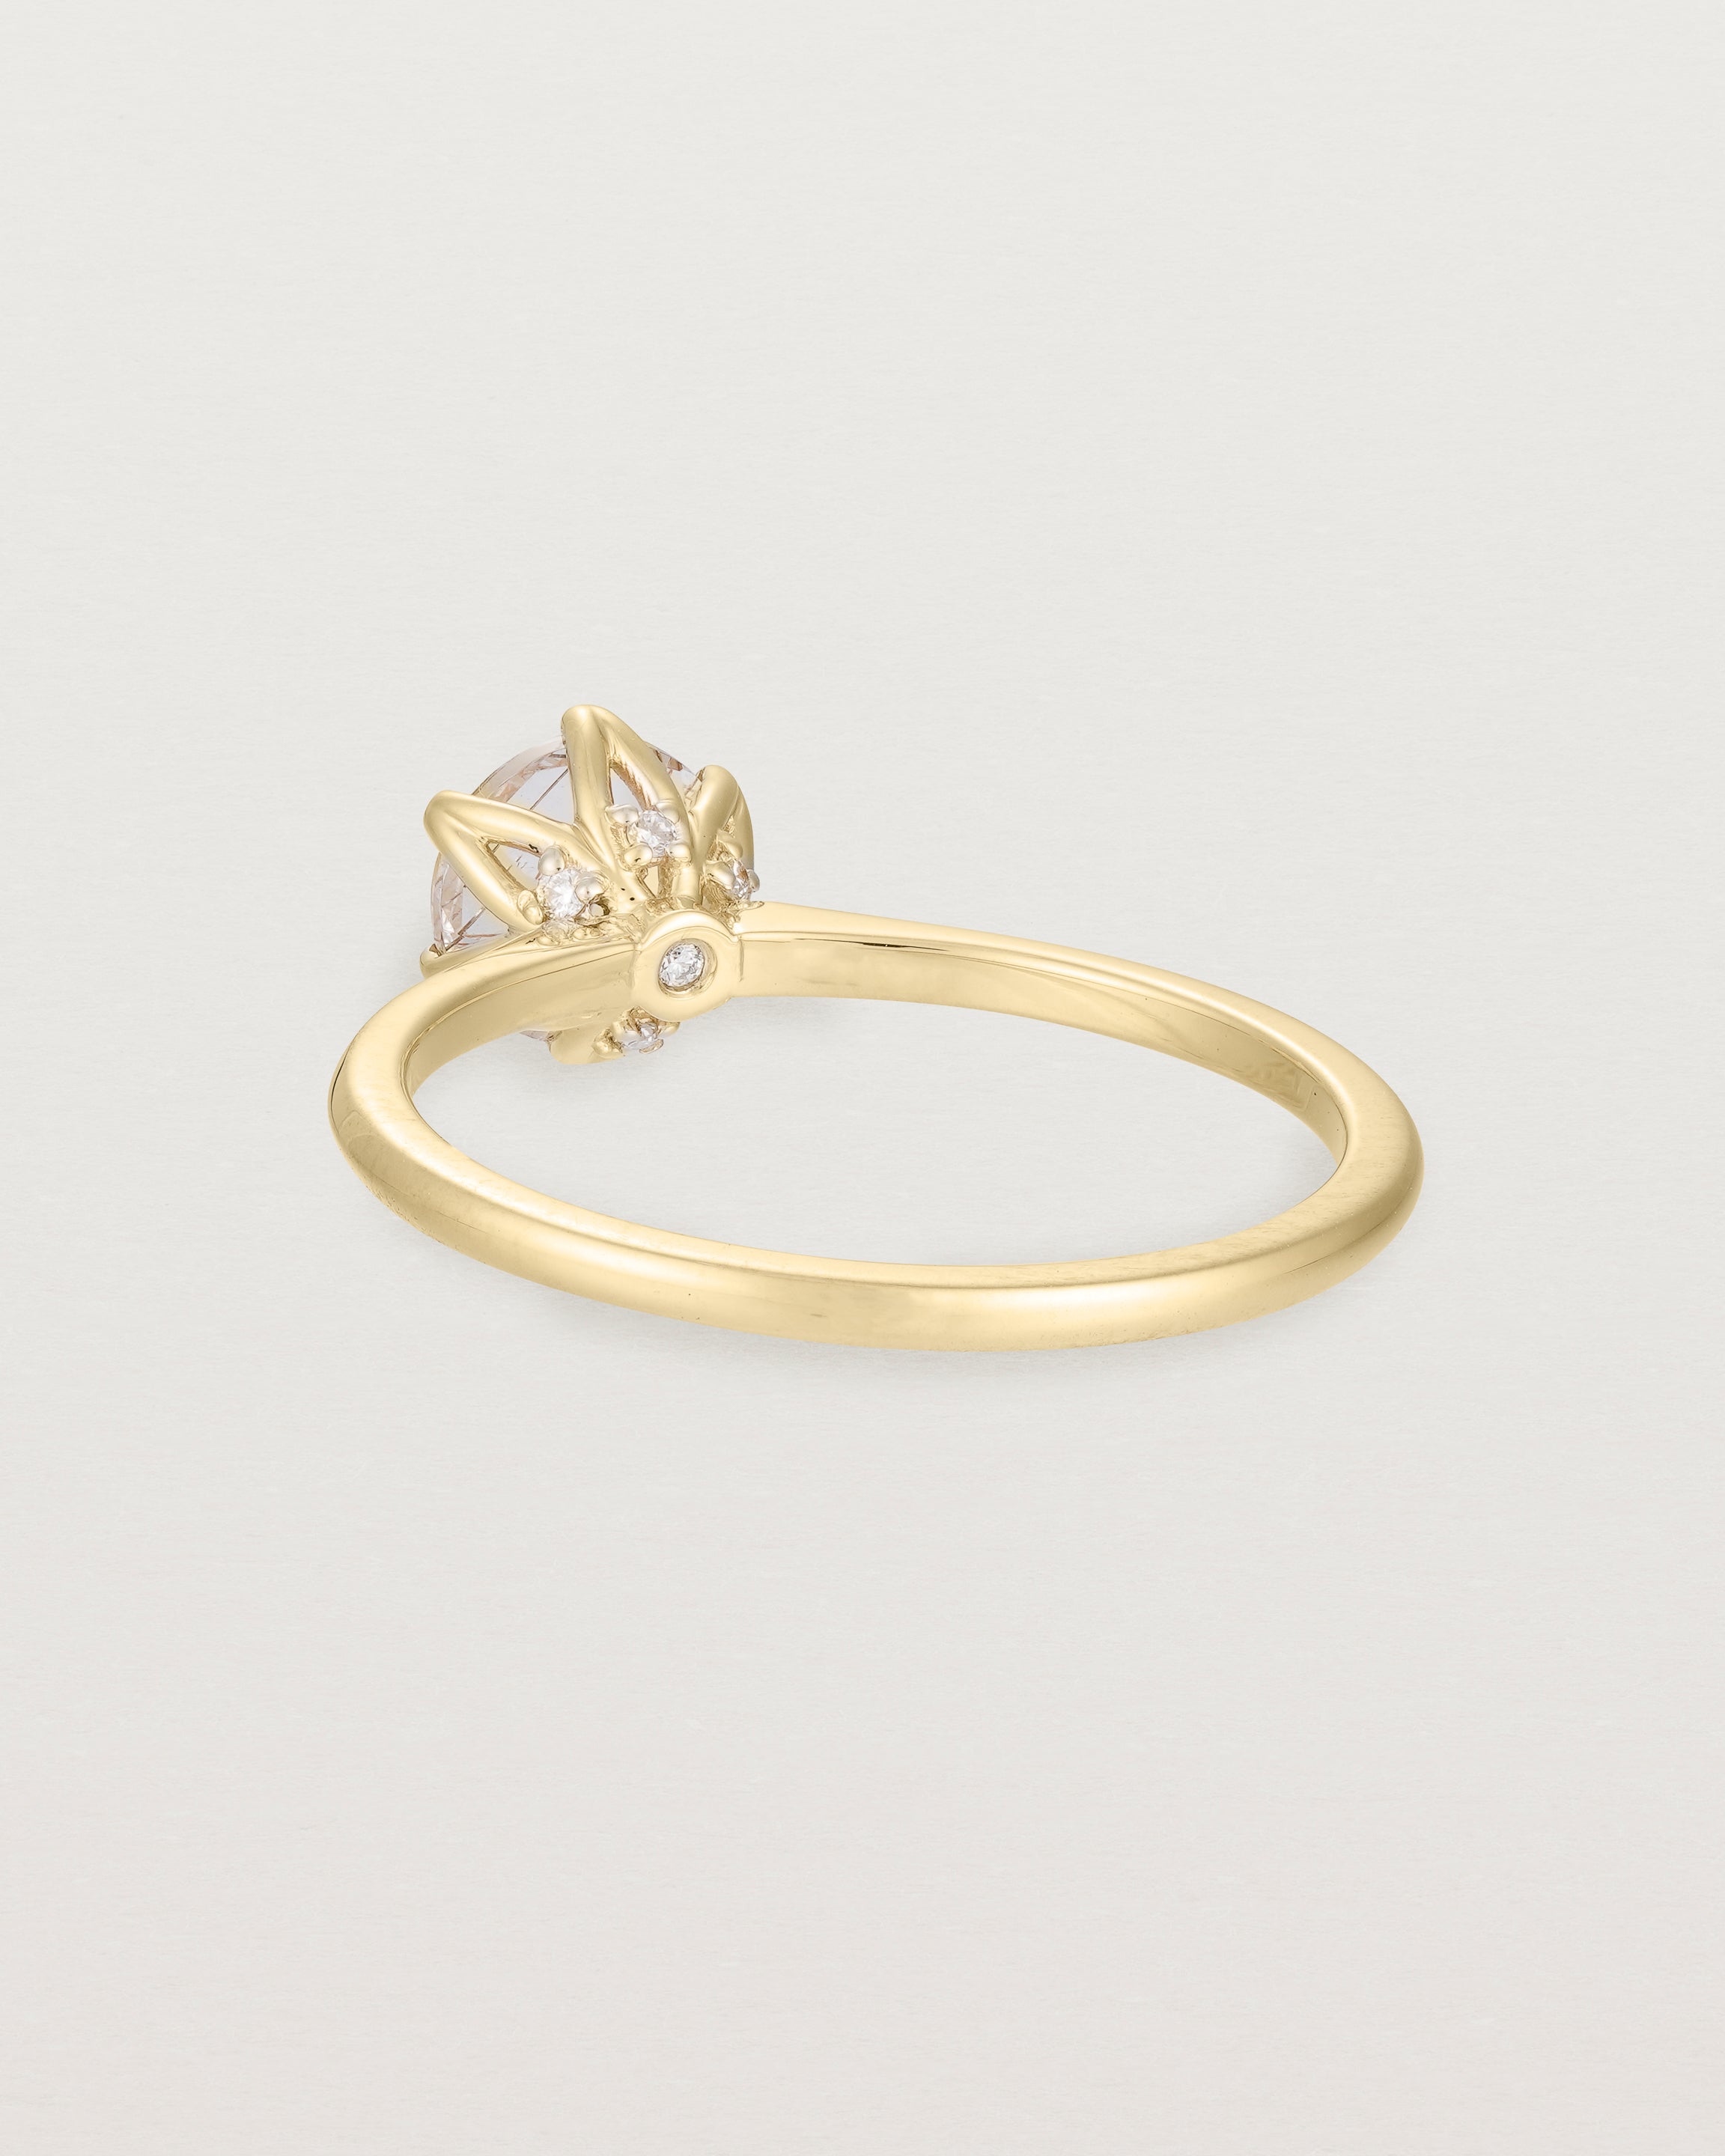 Back view of the Mandala Solitaire Ring | Rutilated Quartz & Diamonds | Yellow Gold.